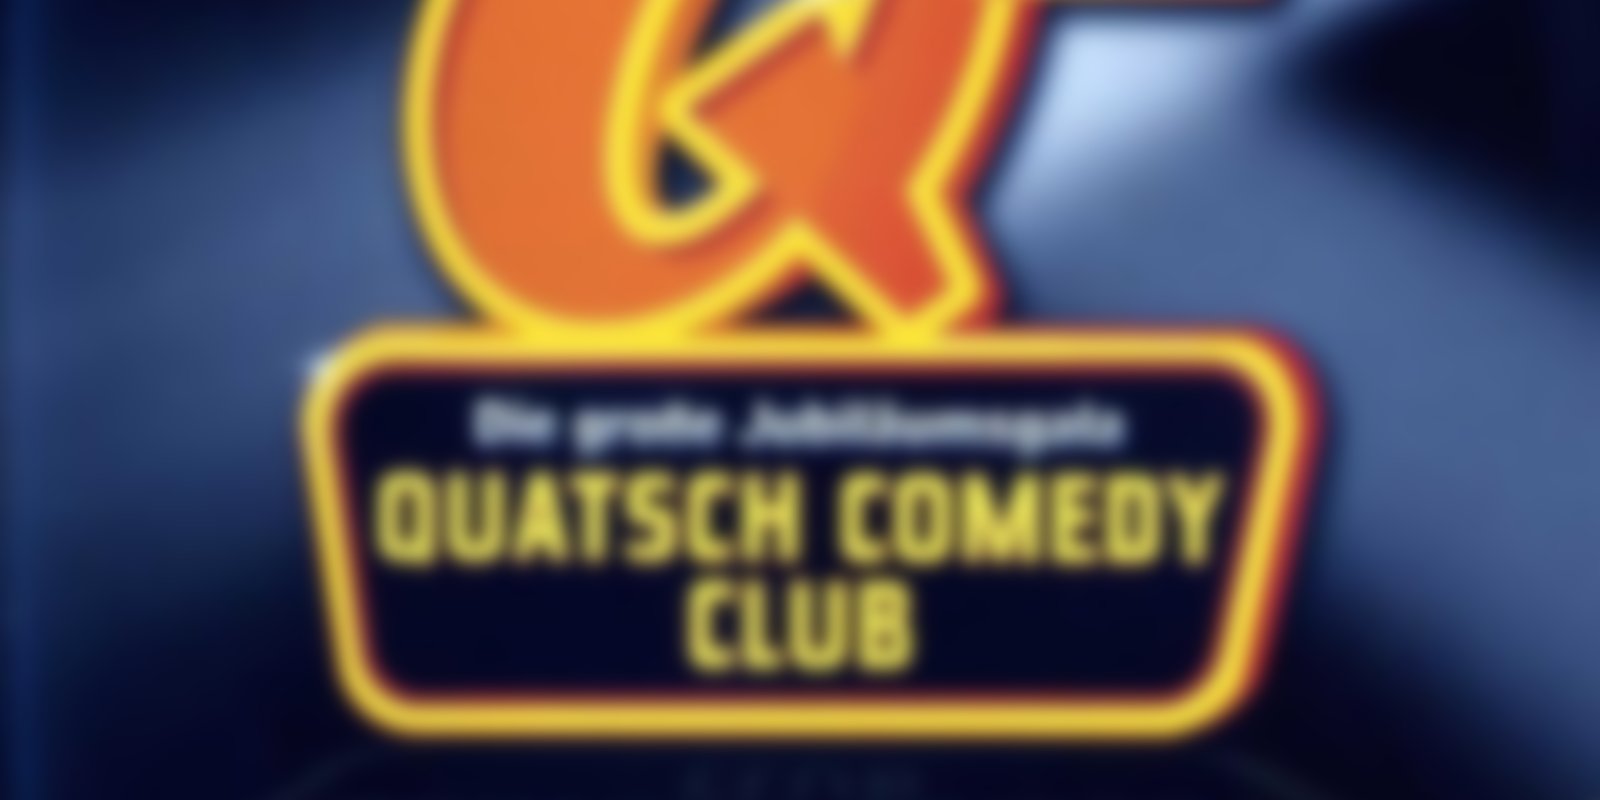 Quatsch Comedy Club - Die große Jubiläumsgala